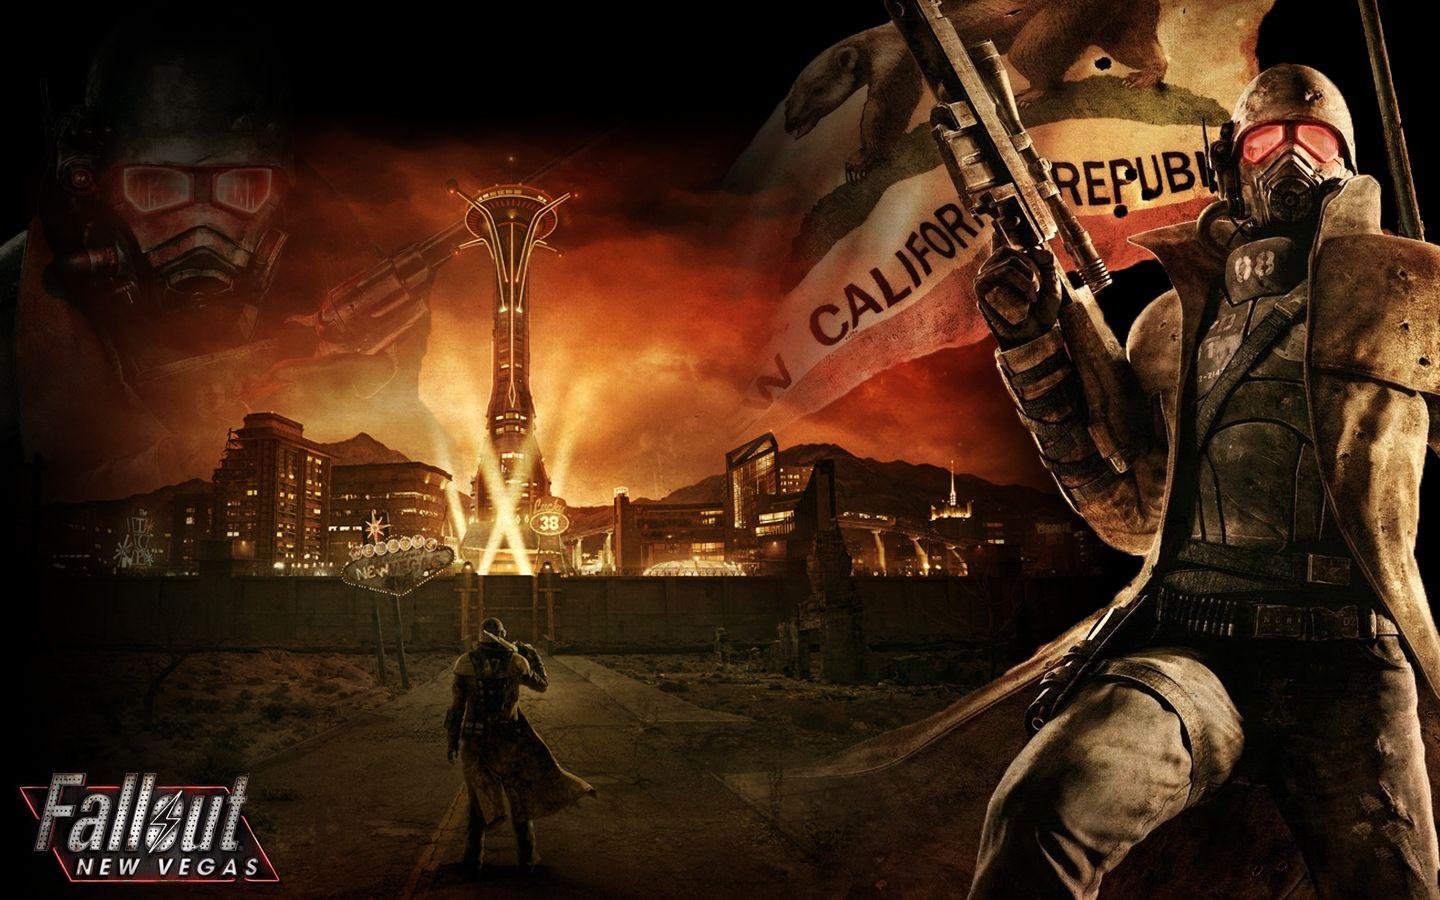 Watch more like Fallout 3 New Vegas Wallpaper